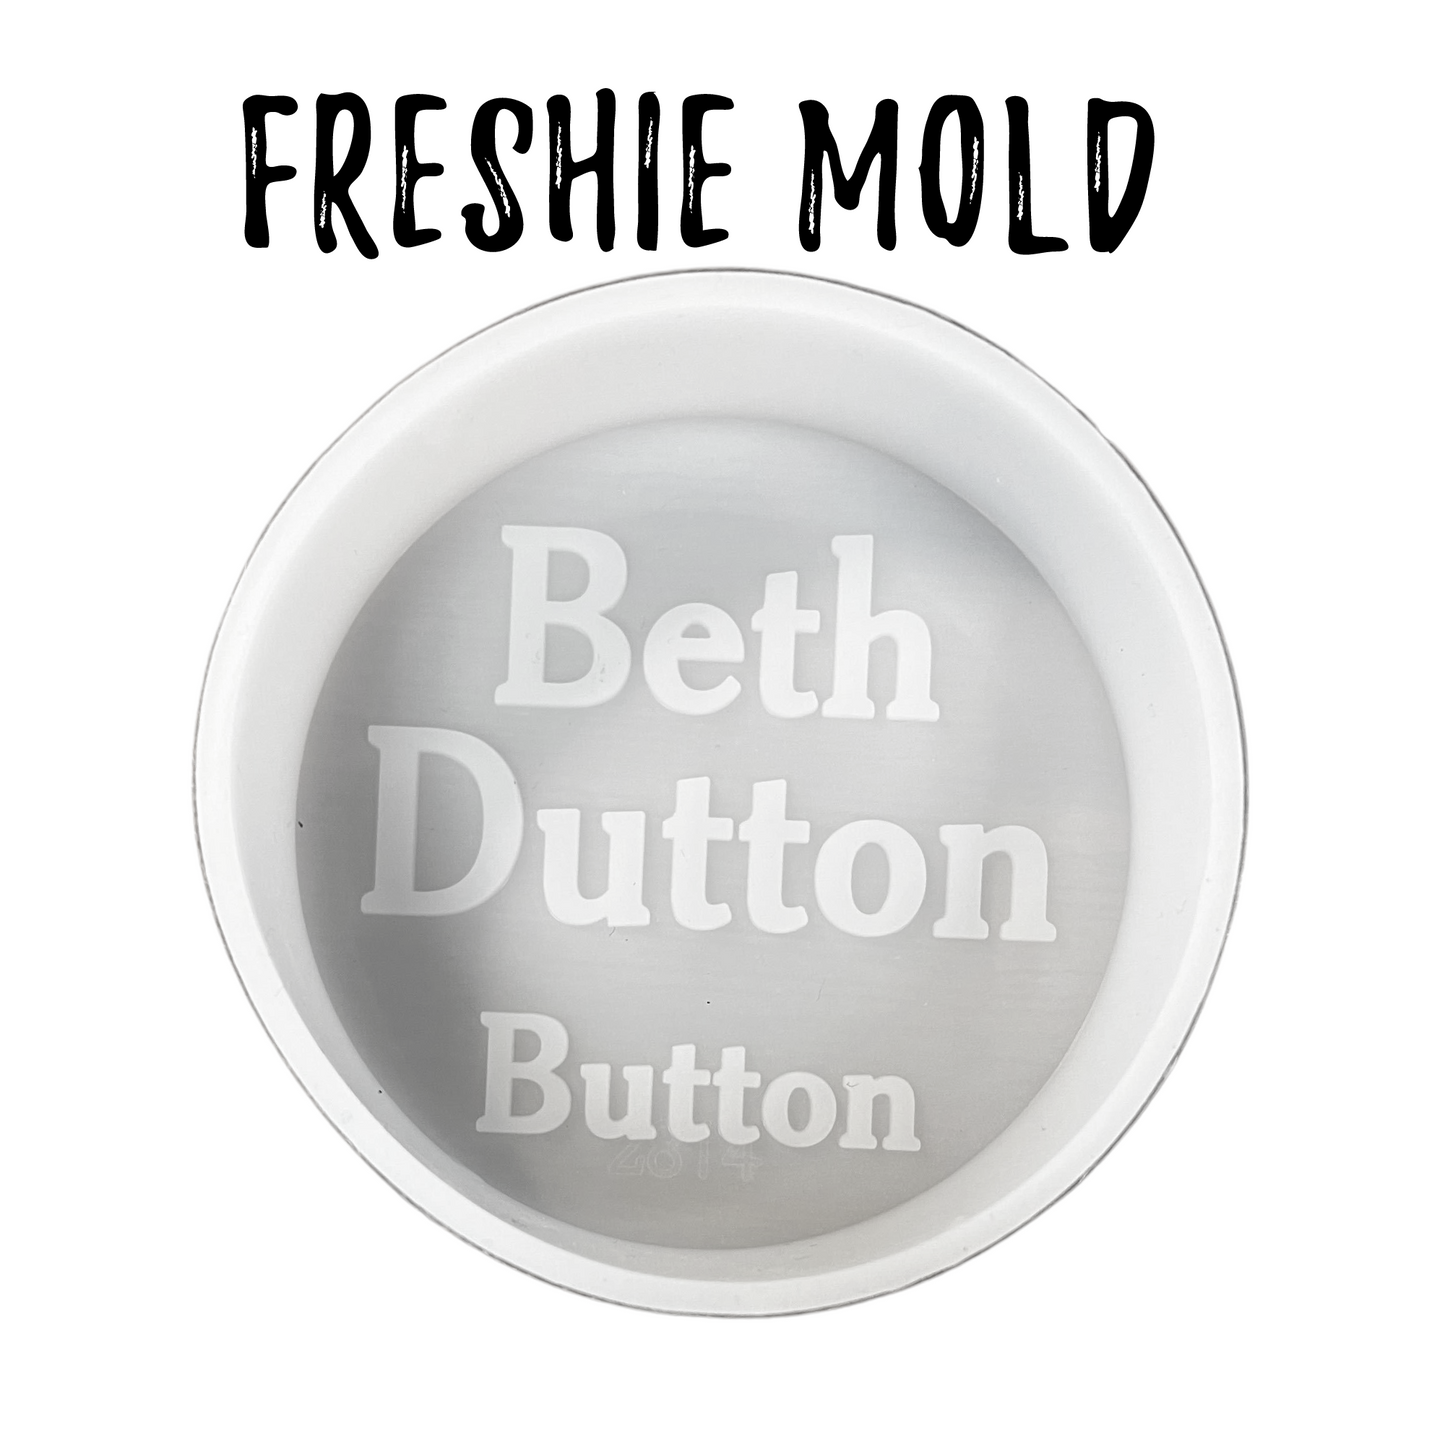 Dutton Button Silicone Mold